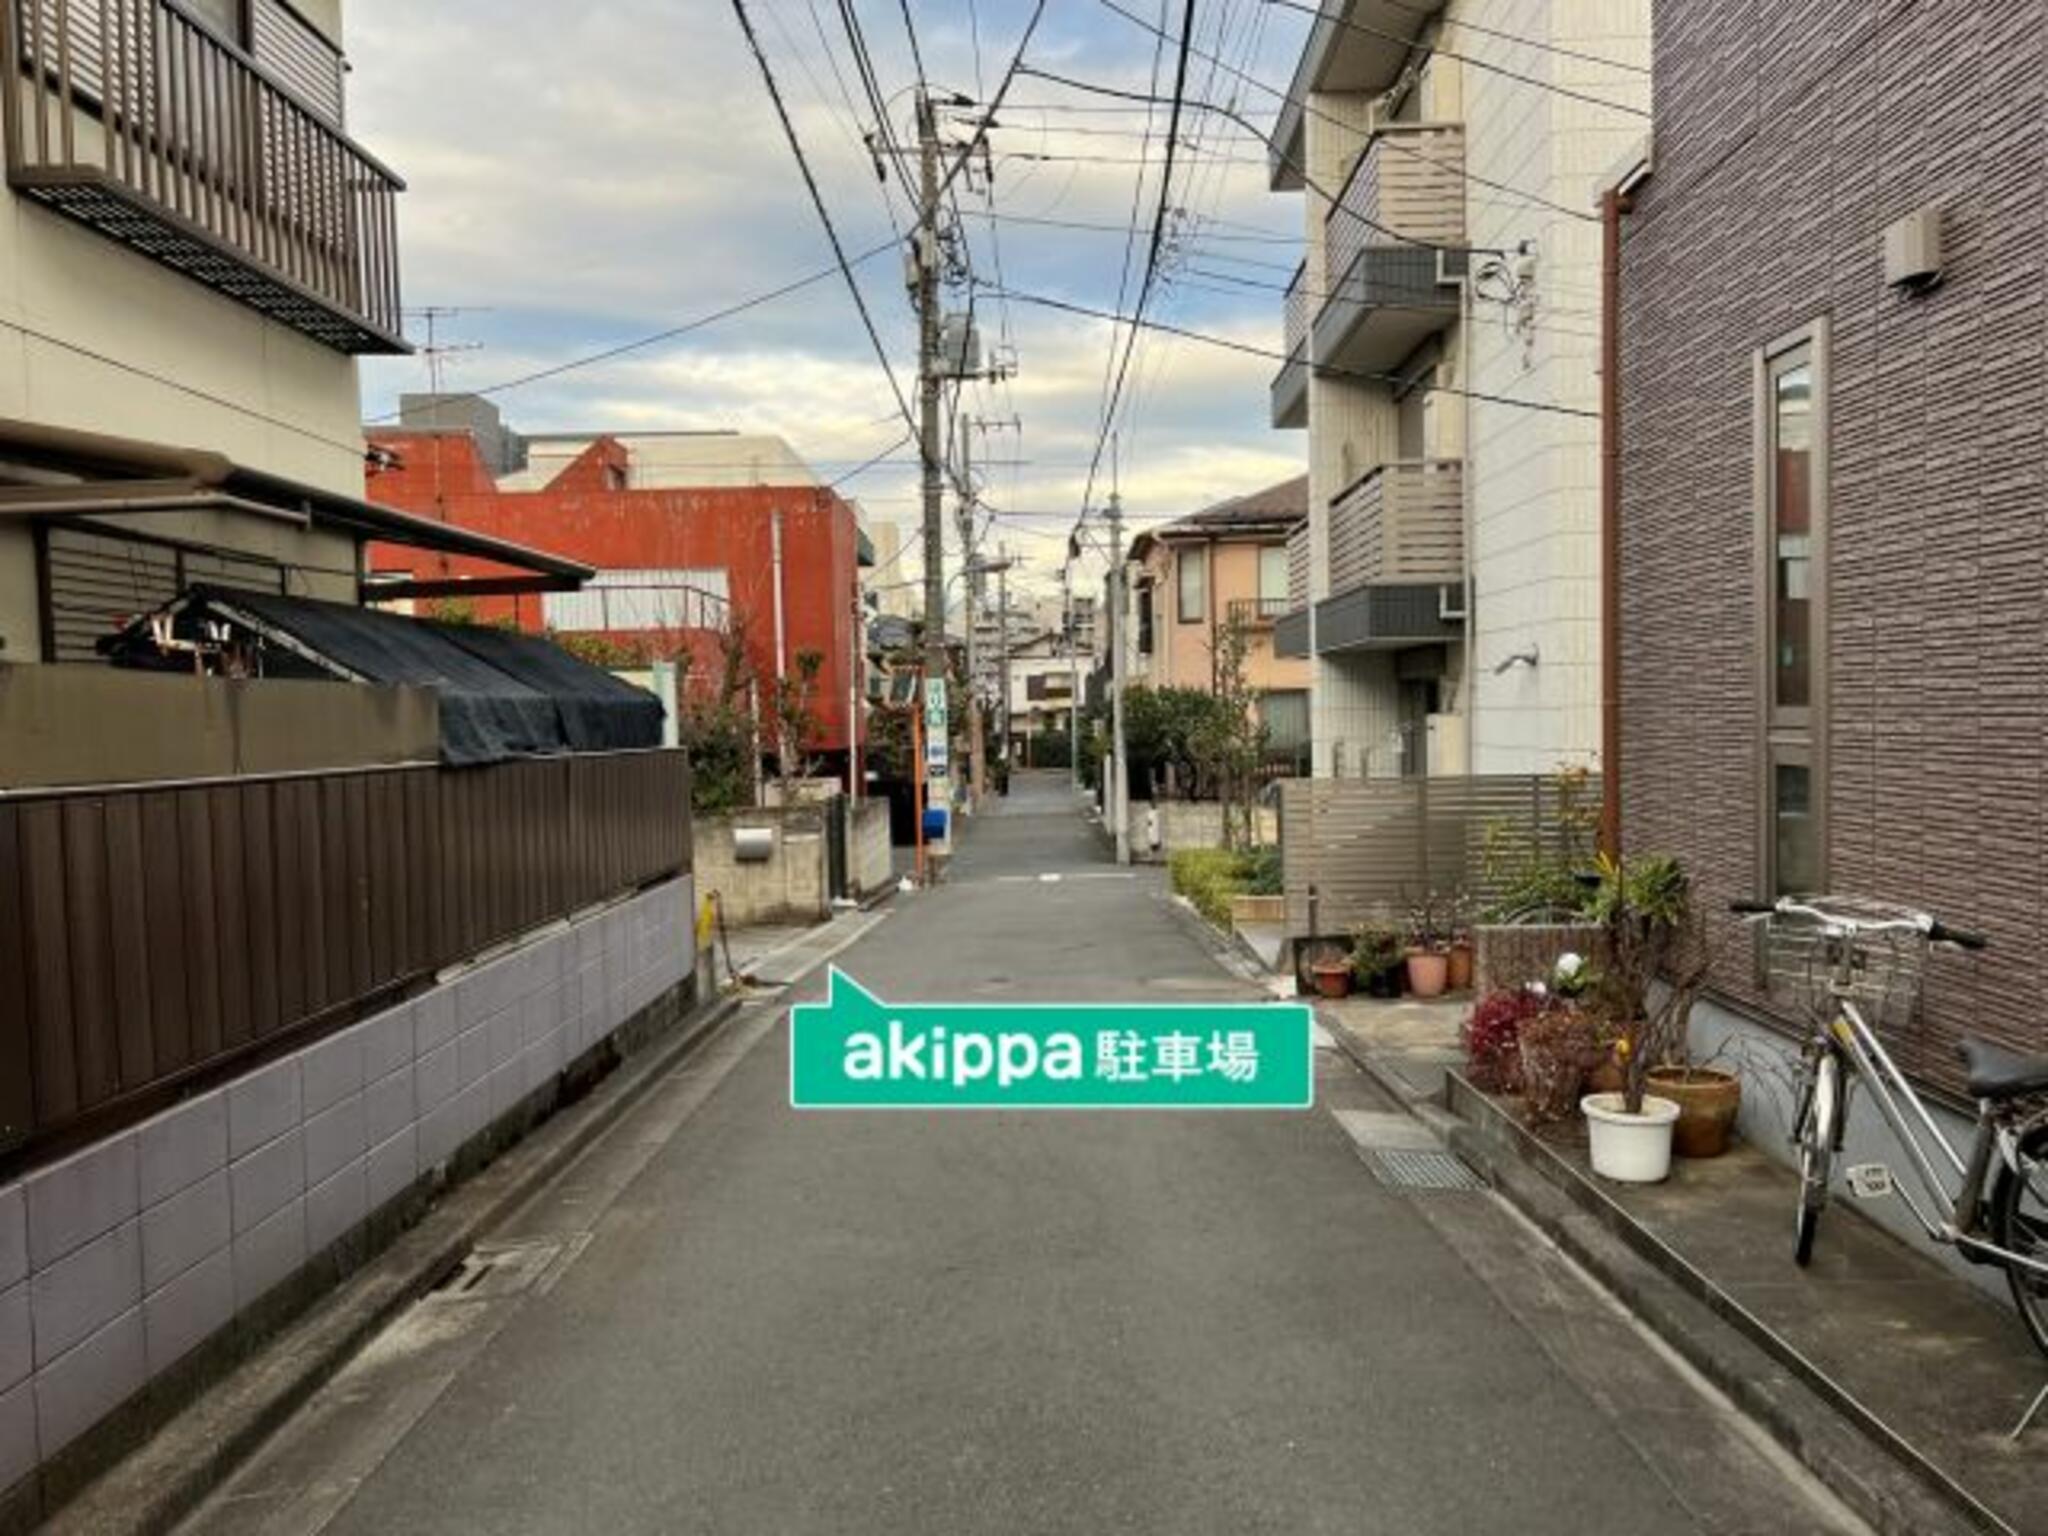 akippa駐車場:東京都新宿区喜久井町34の代表写真3